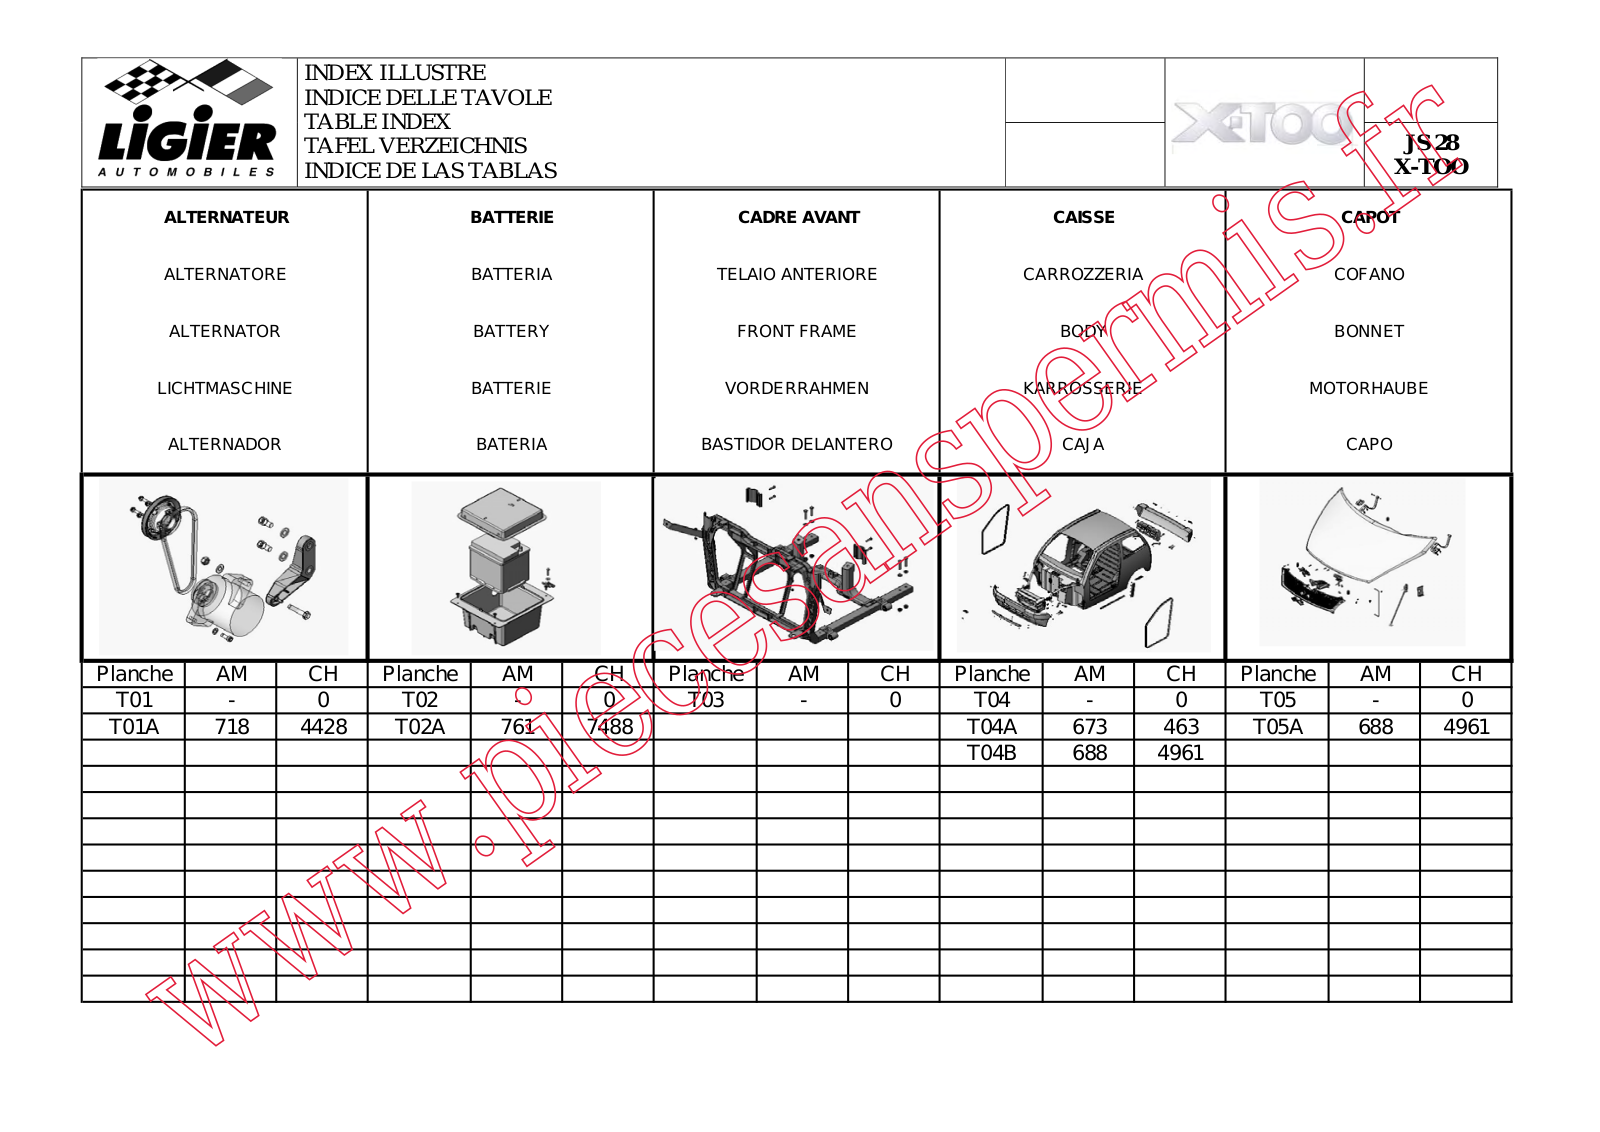 Ligier X Too User Manual